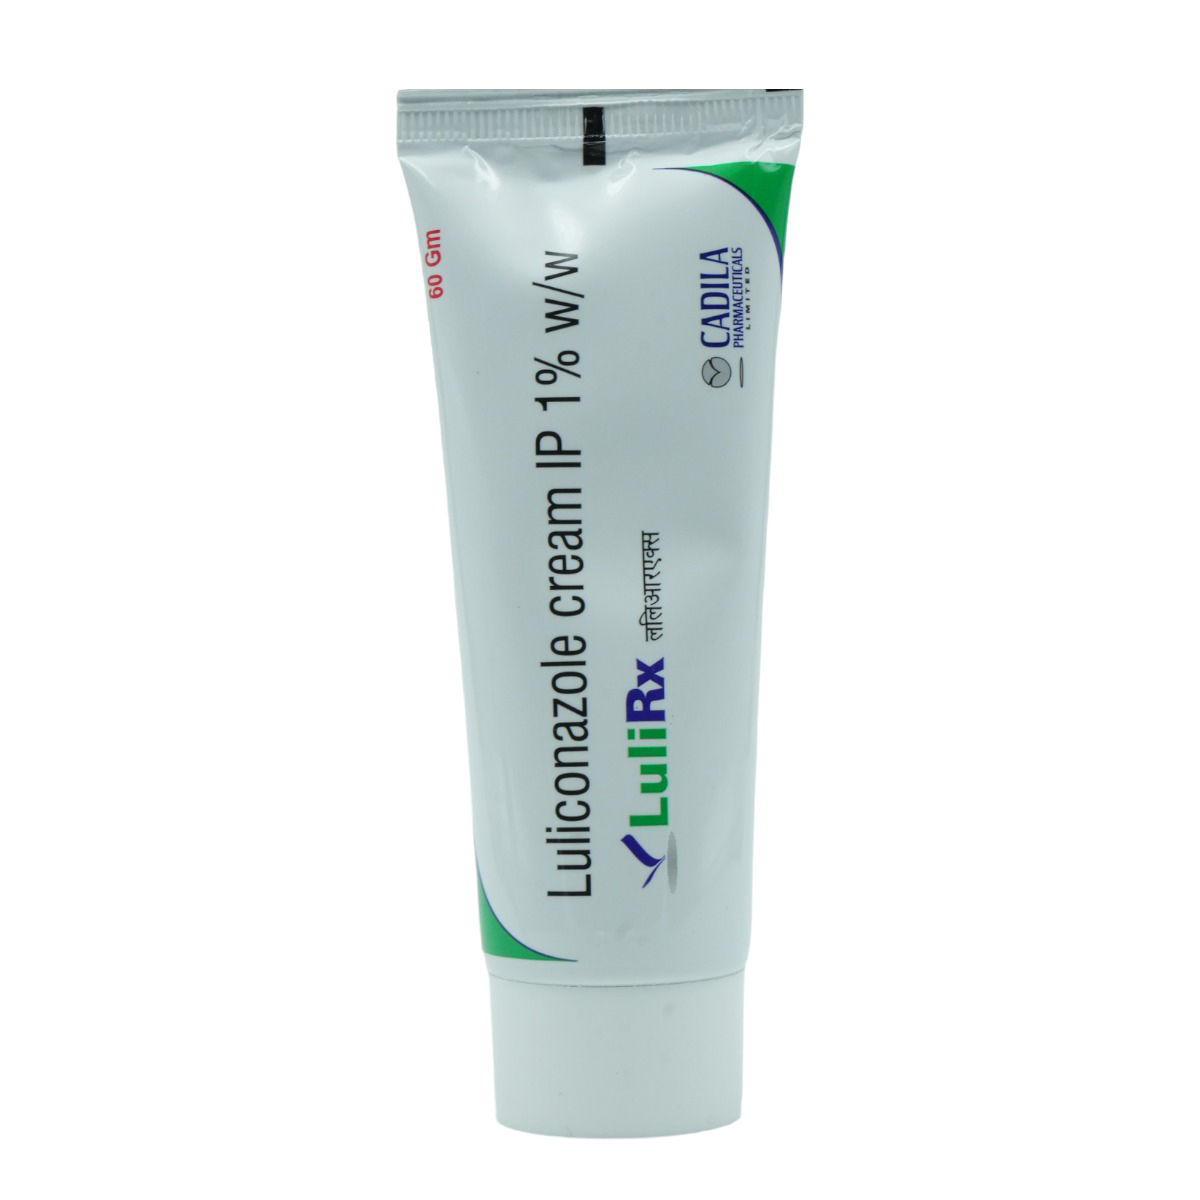 Buy Lulirx Cream 60 gm Online